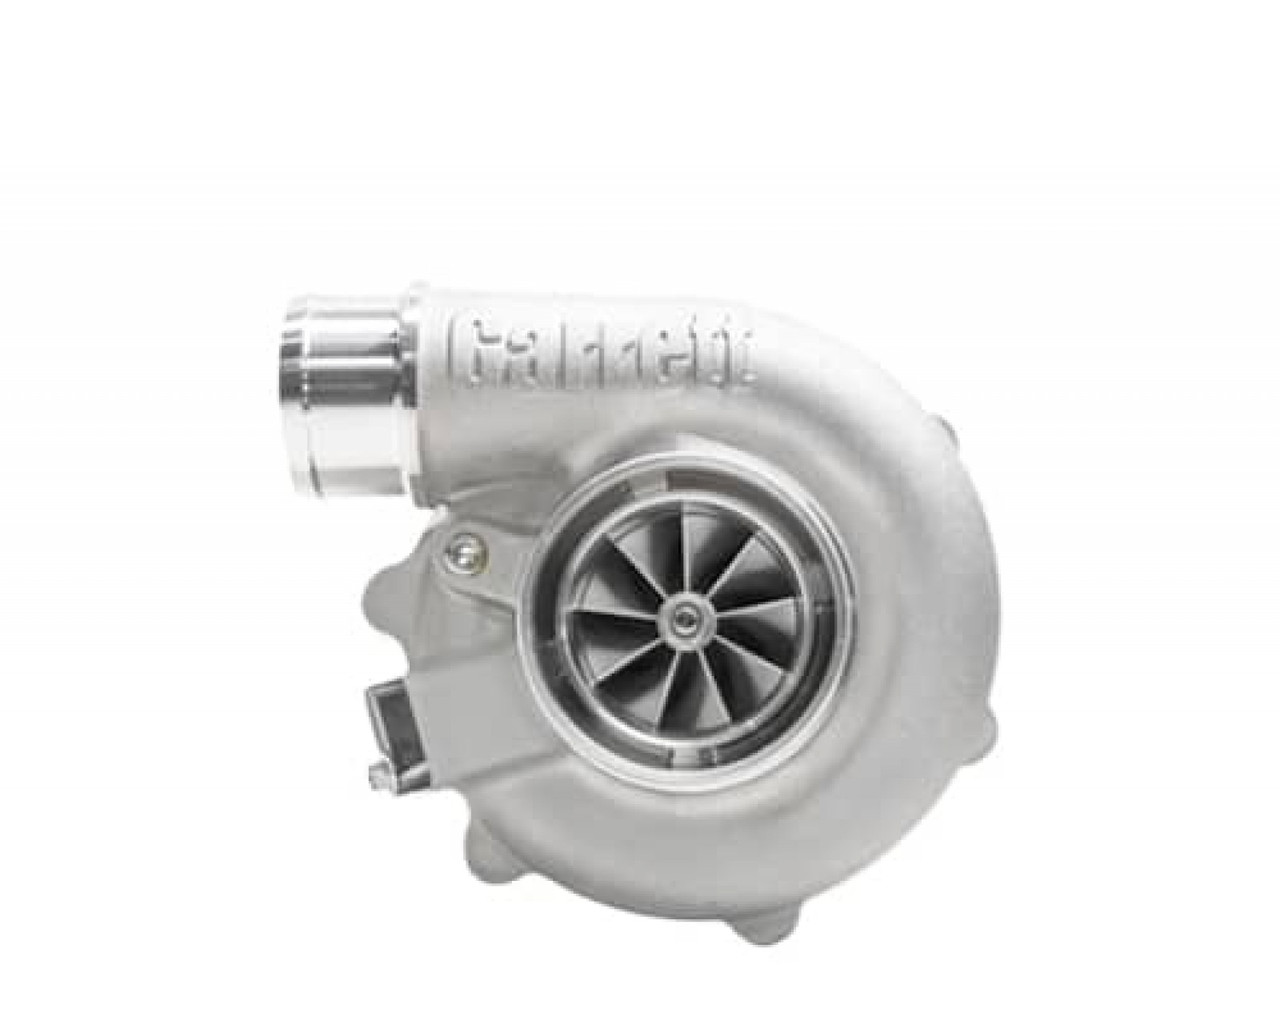 Garrett G25-550 RR Turbocharger Div T4 / V-Band 0.92 A/R Int WG (GAR-877895-5013S)